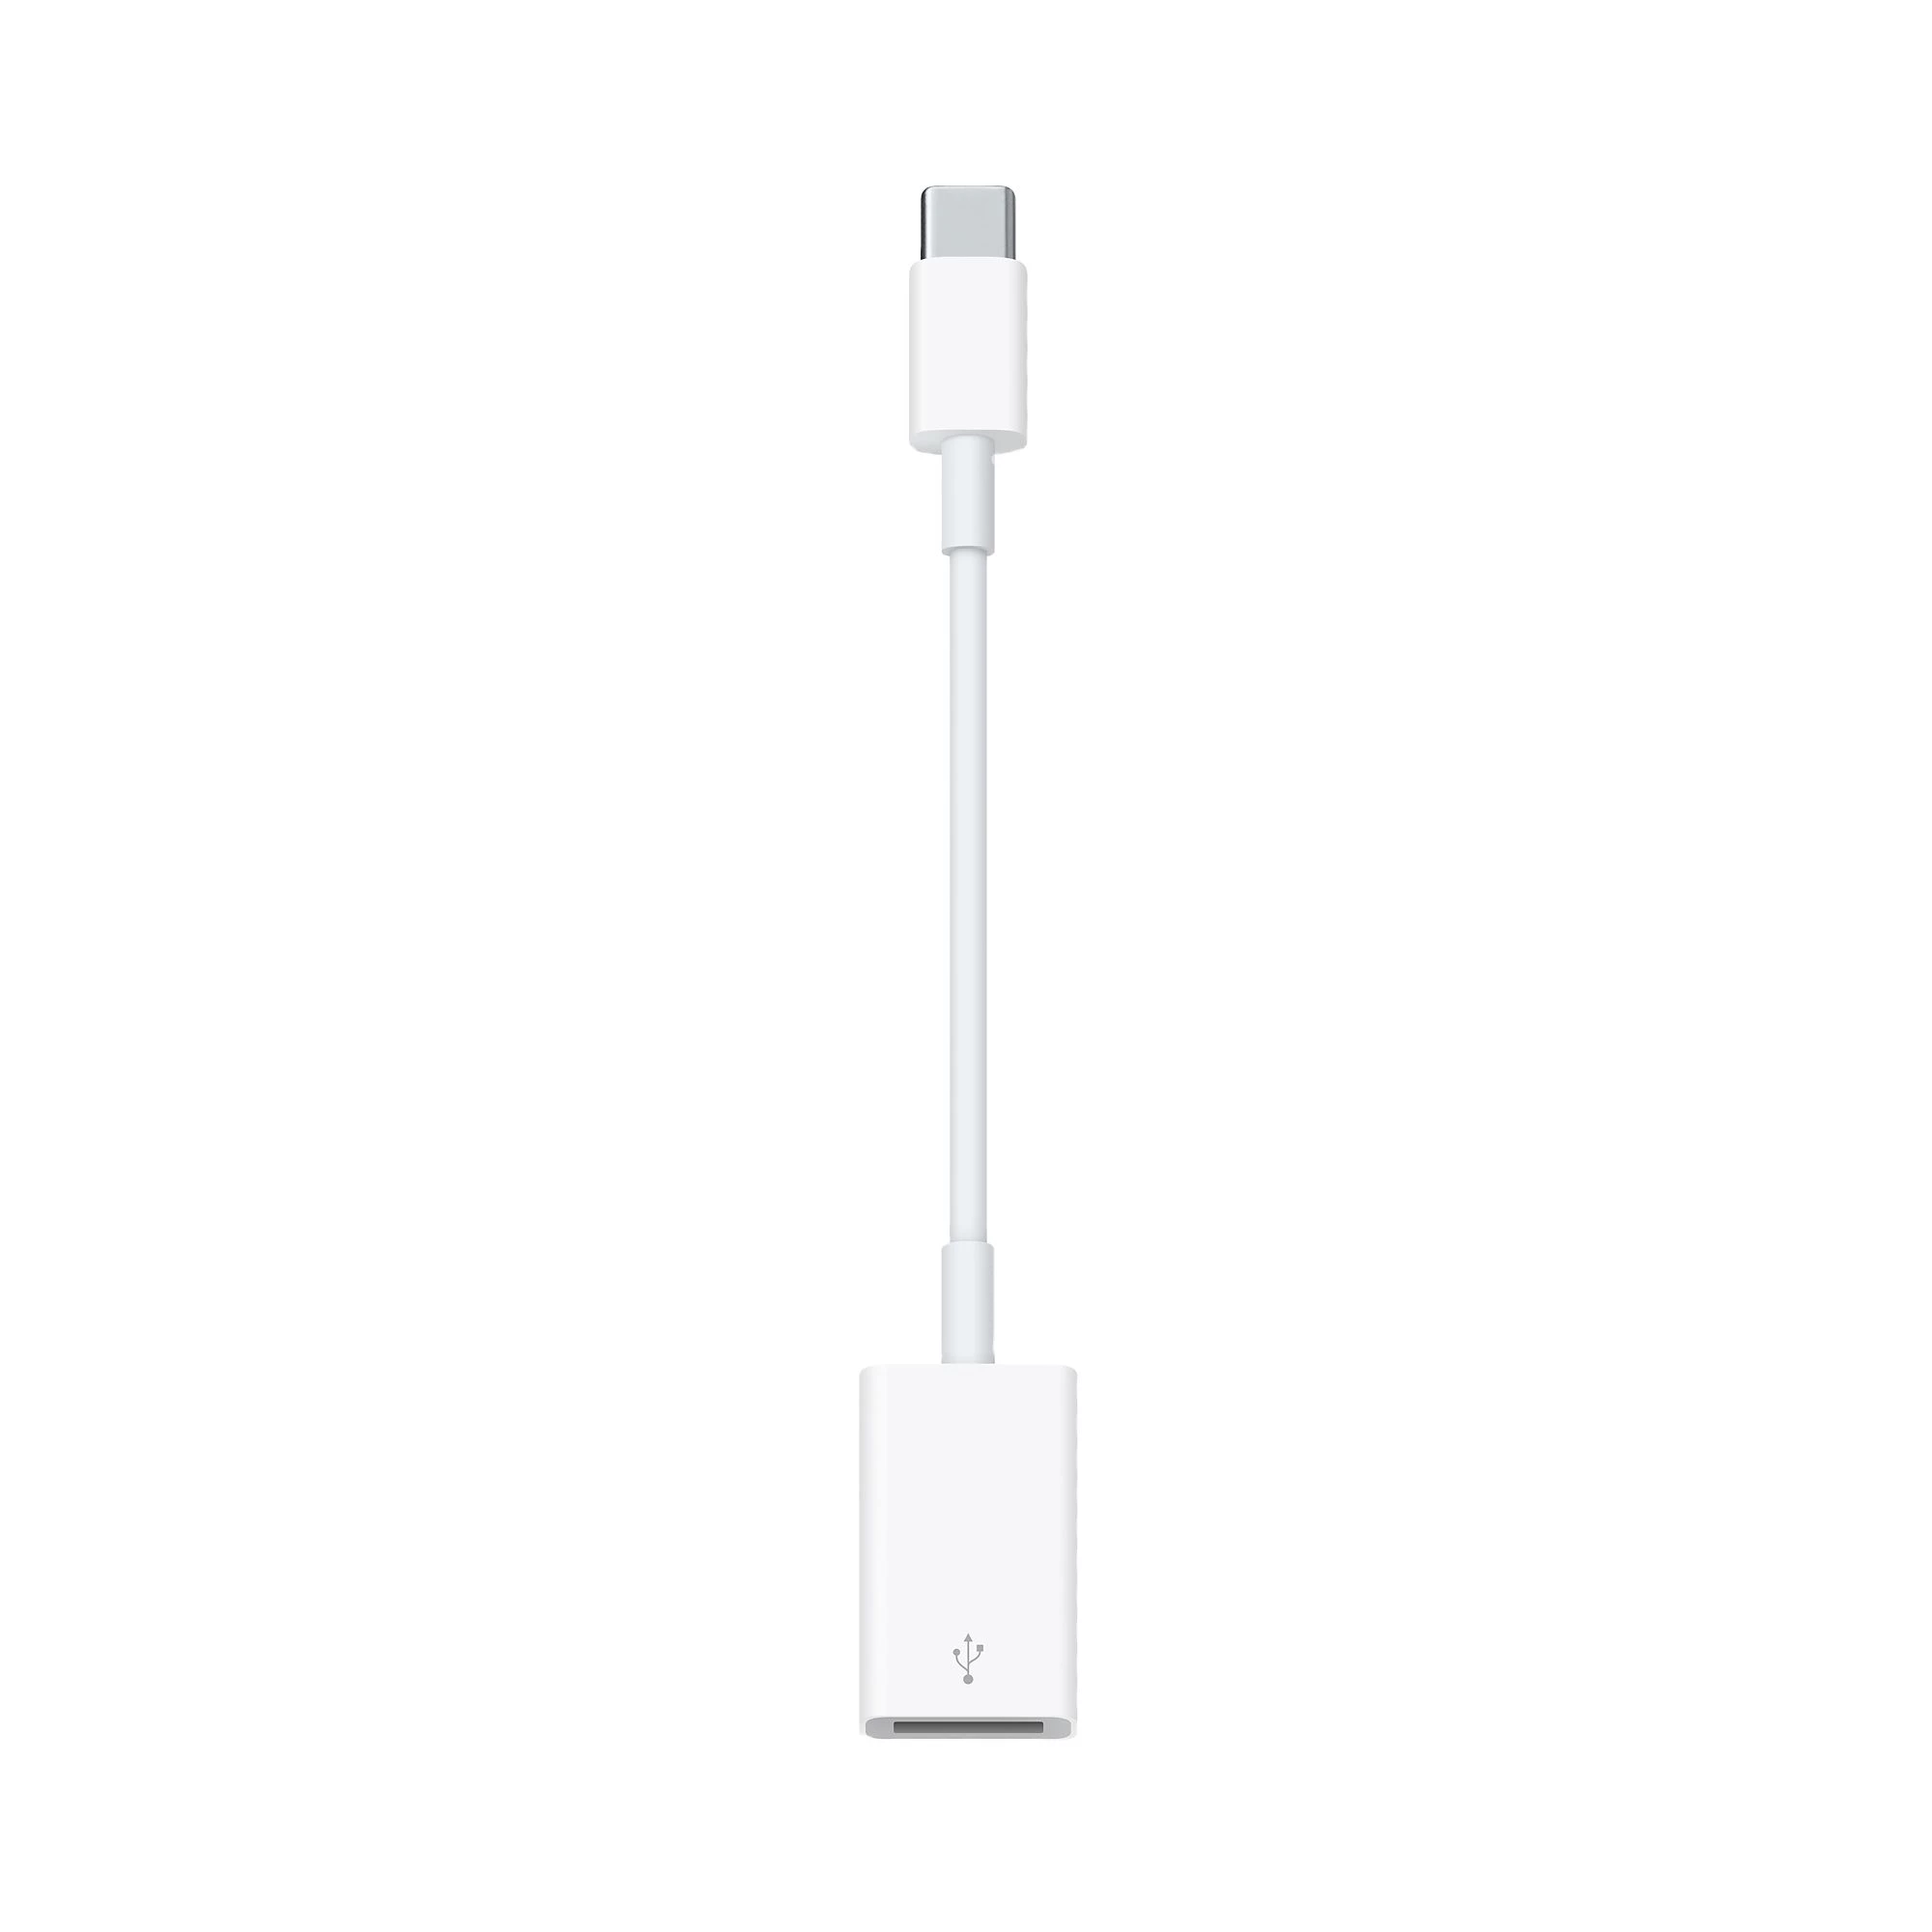 Apple USB-C to USB Adapter (MJ1M2)